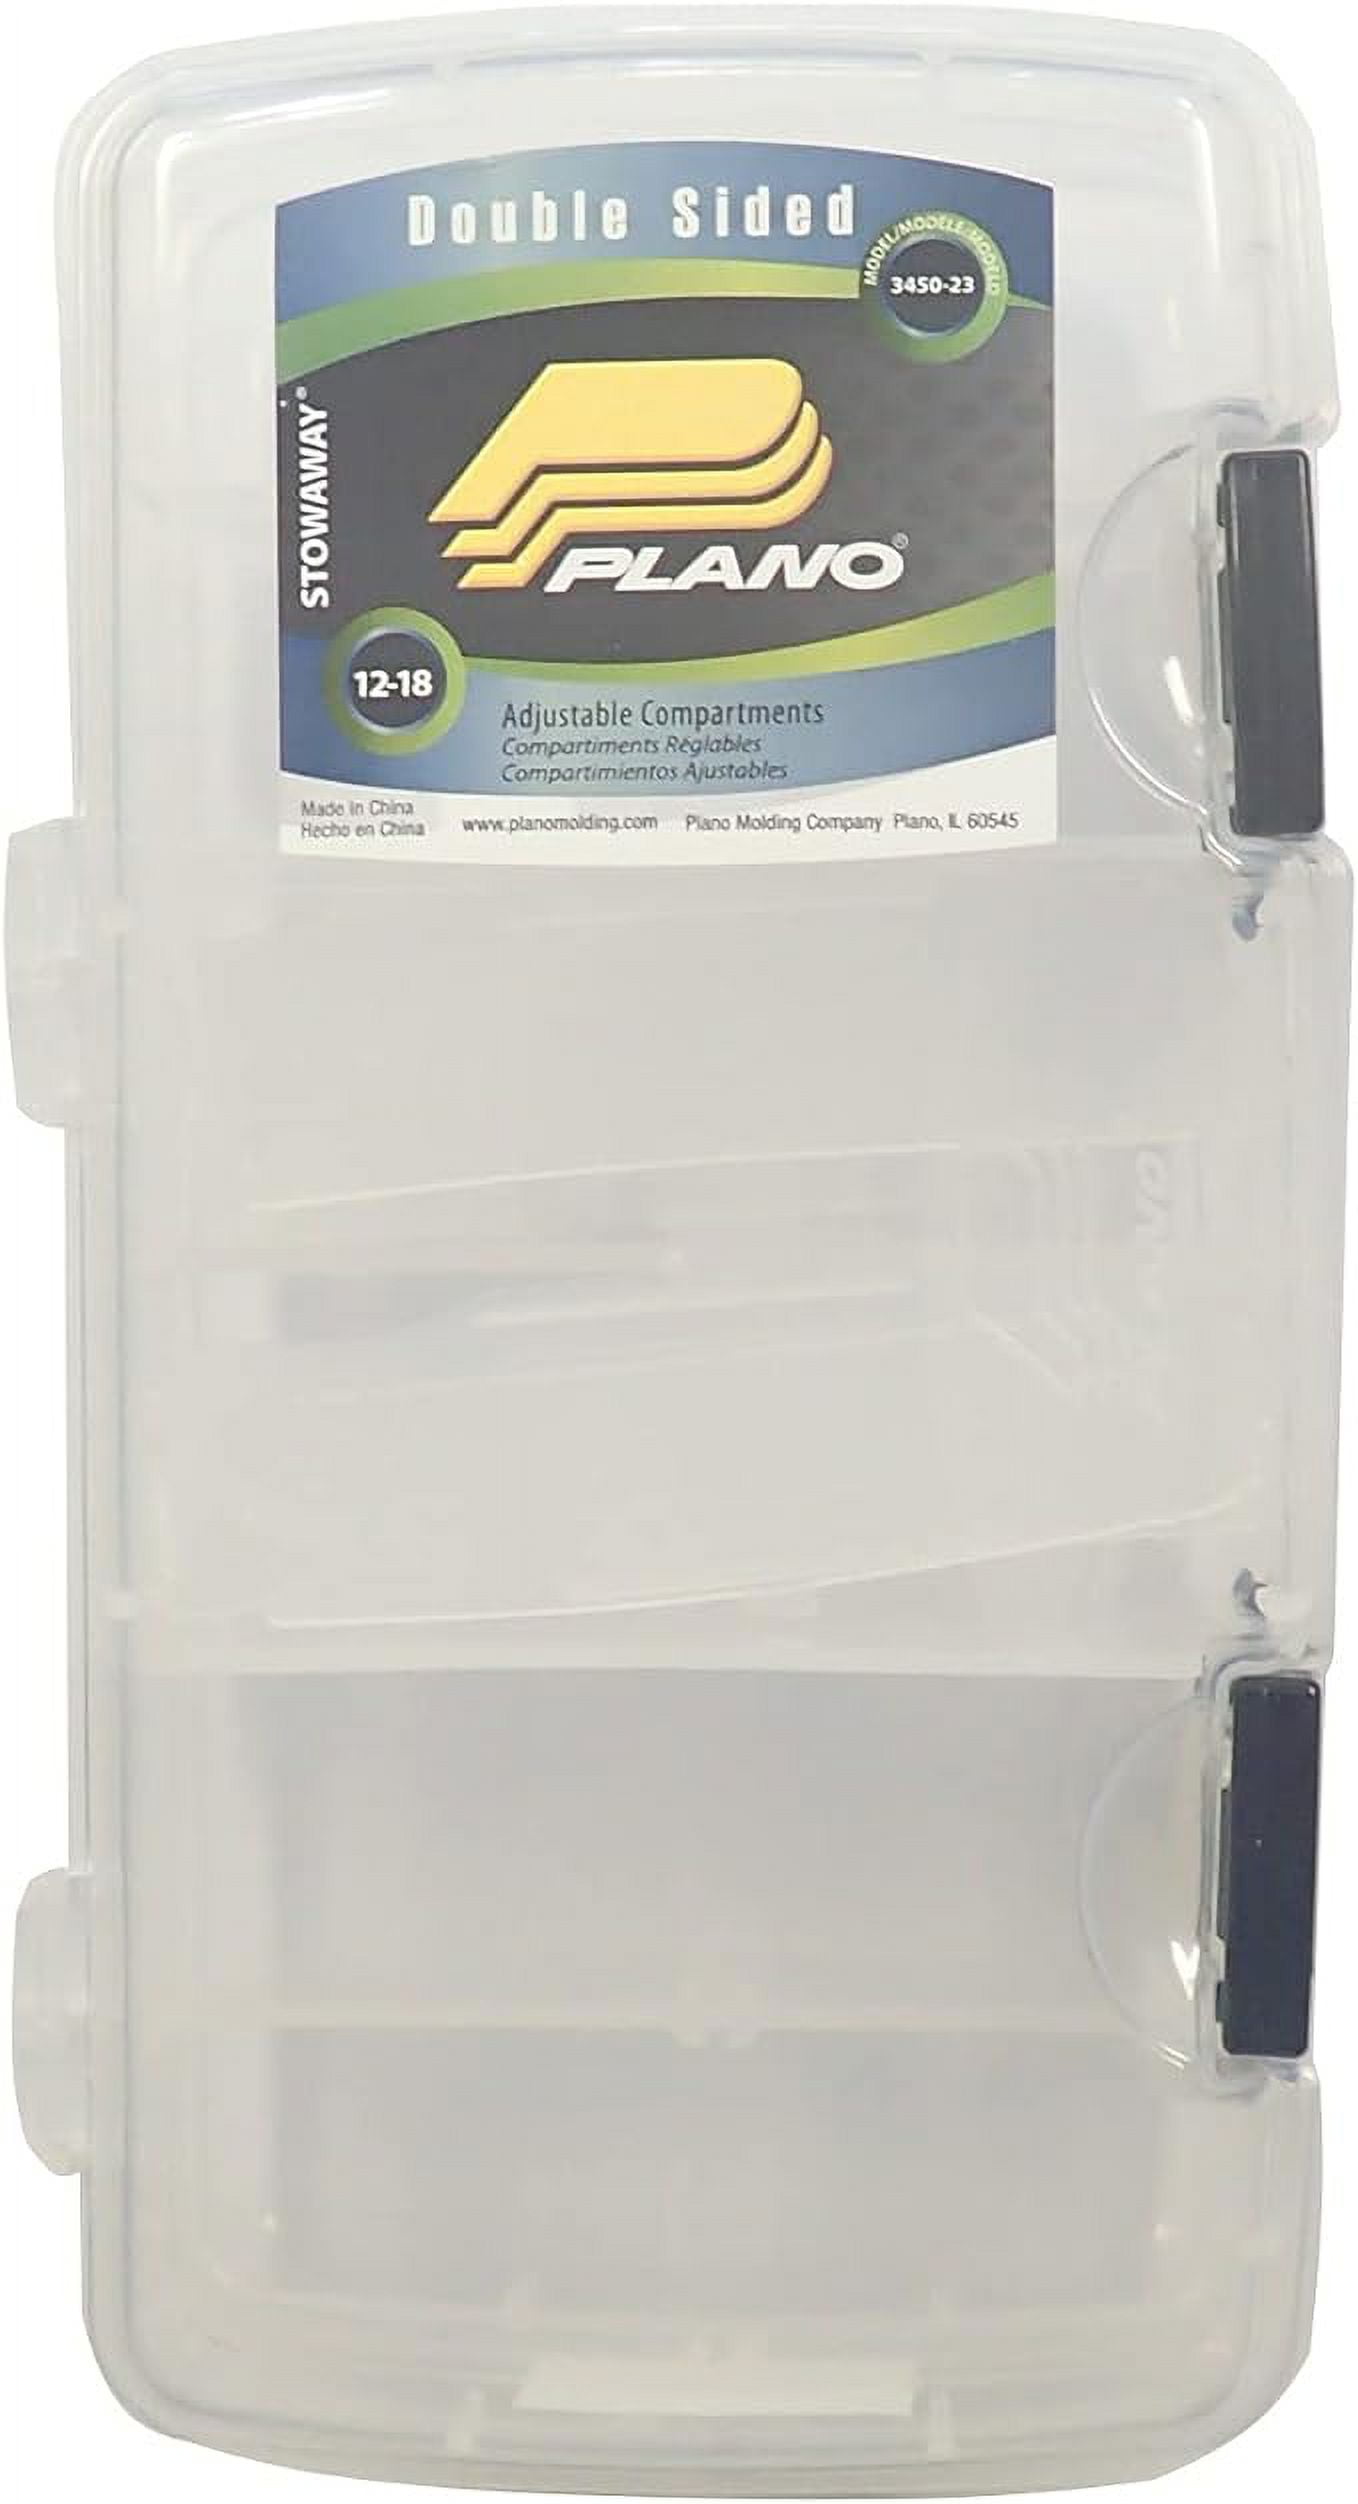 Plano 3450-23 Double-Sided Tackle Box, Premium Tackle Storage 